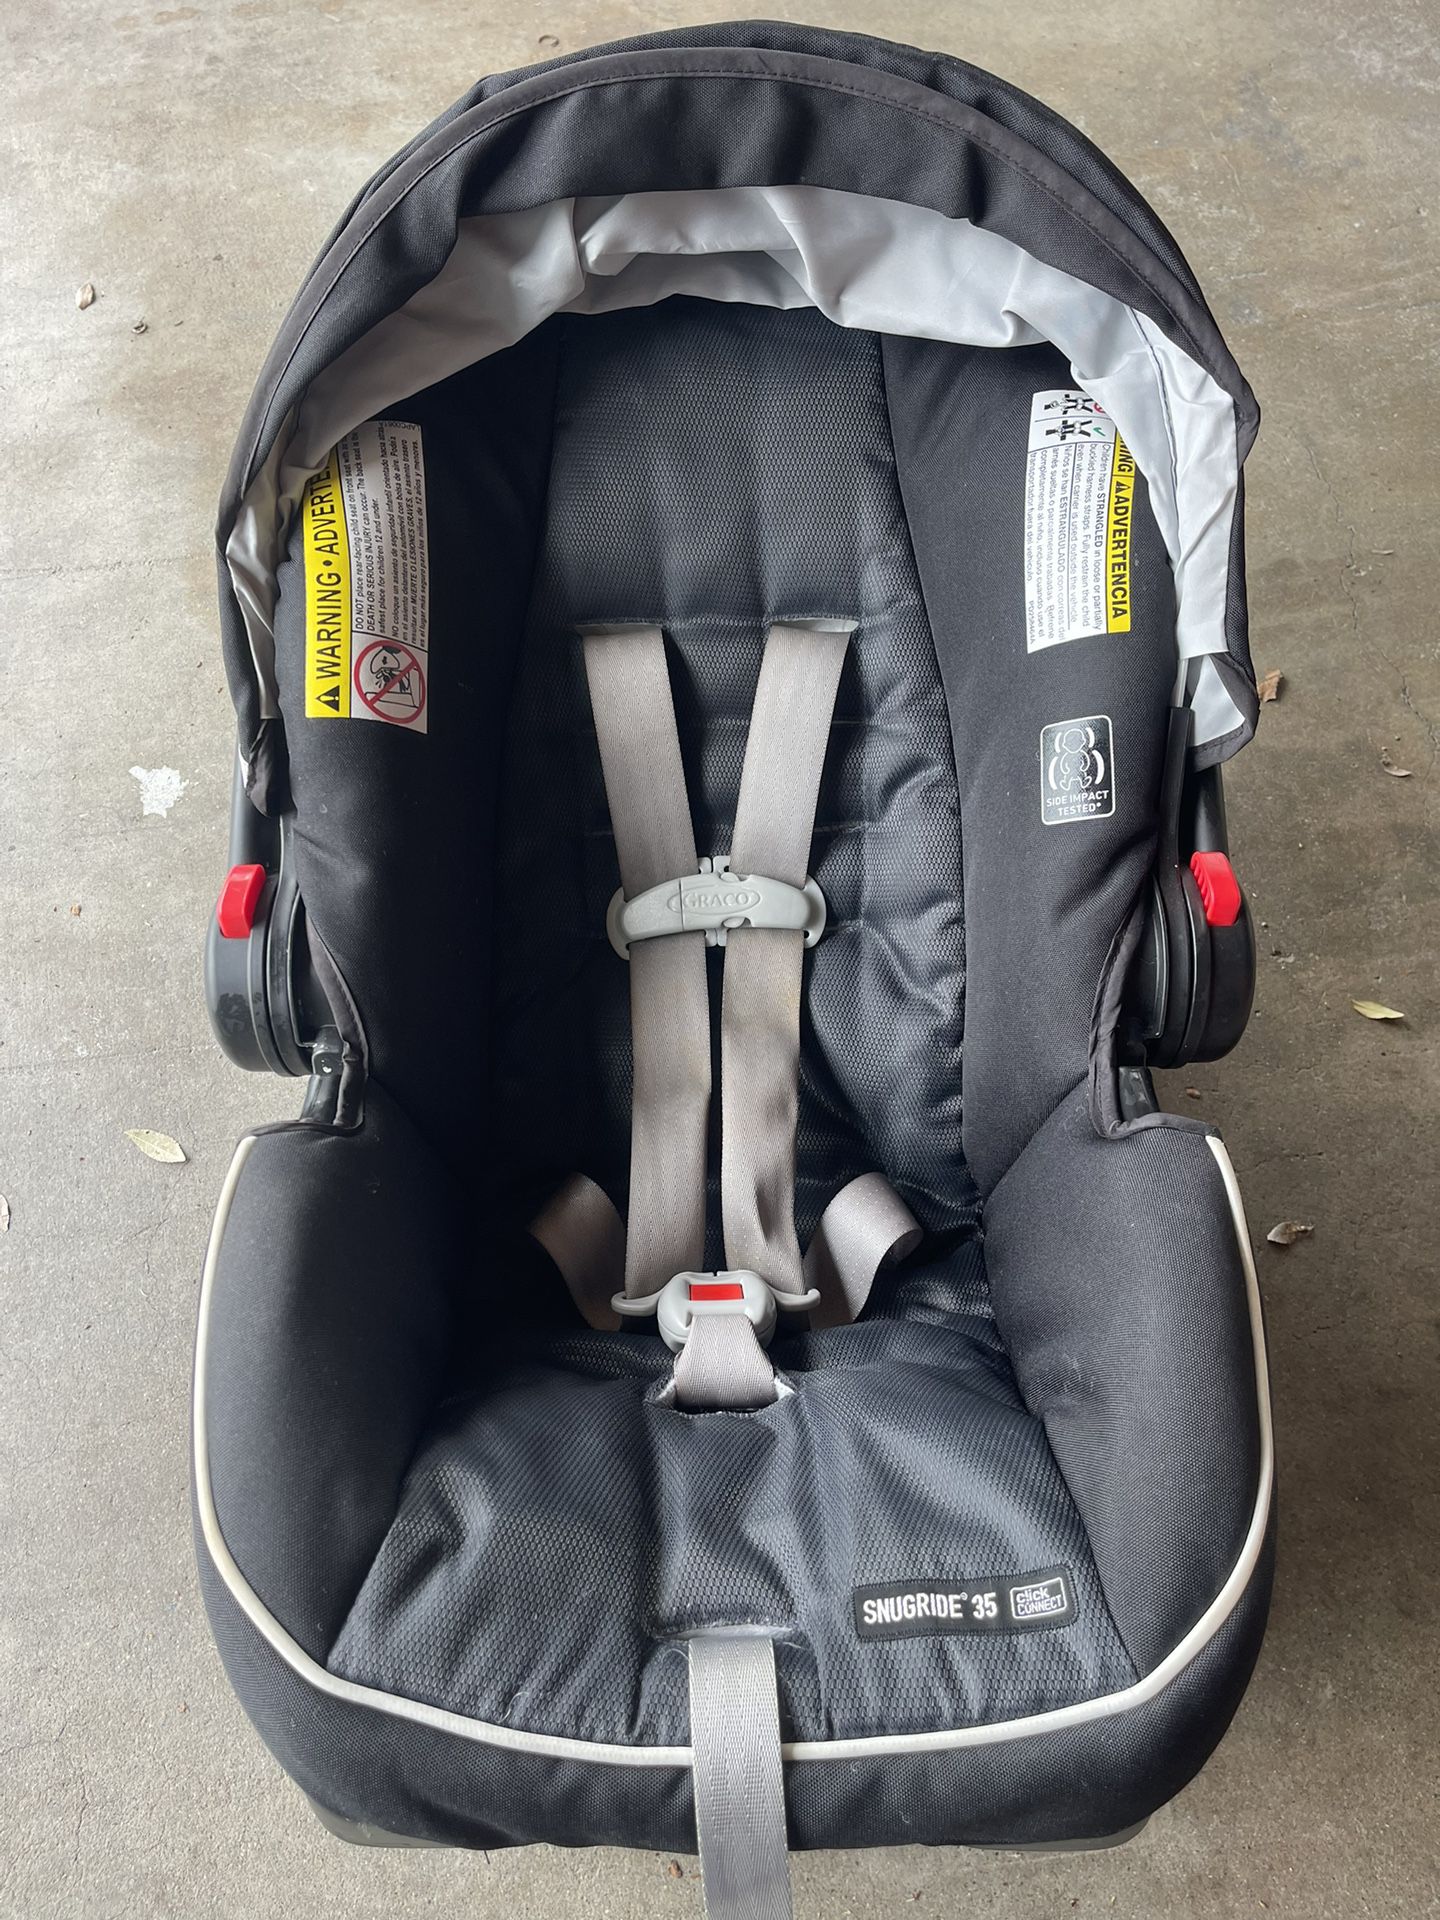 Graco Baby Car seat